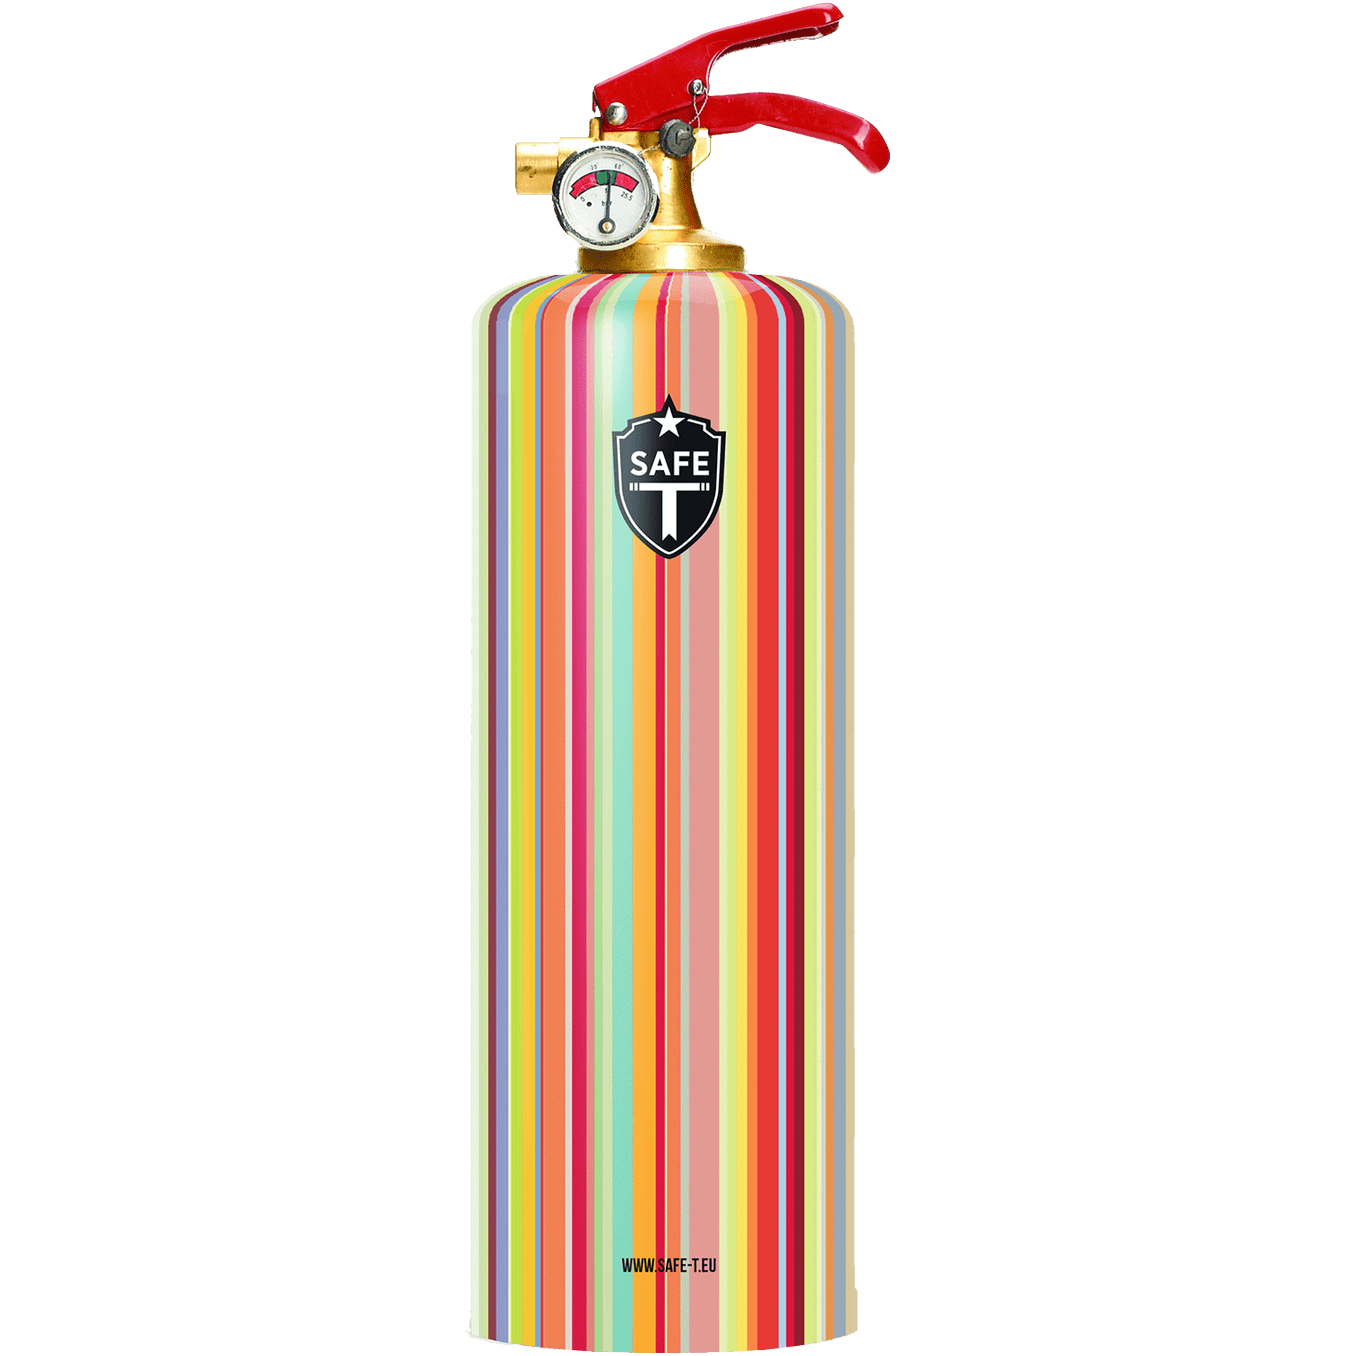 Safe-T Designer Fire Extinguisher fullcolors unique housewarming gift